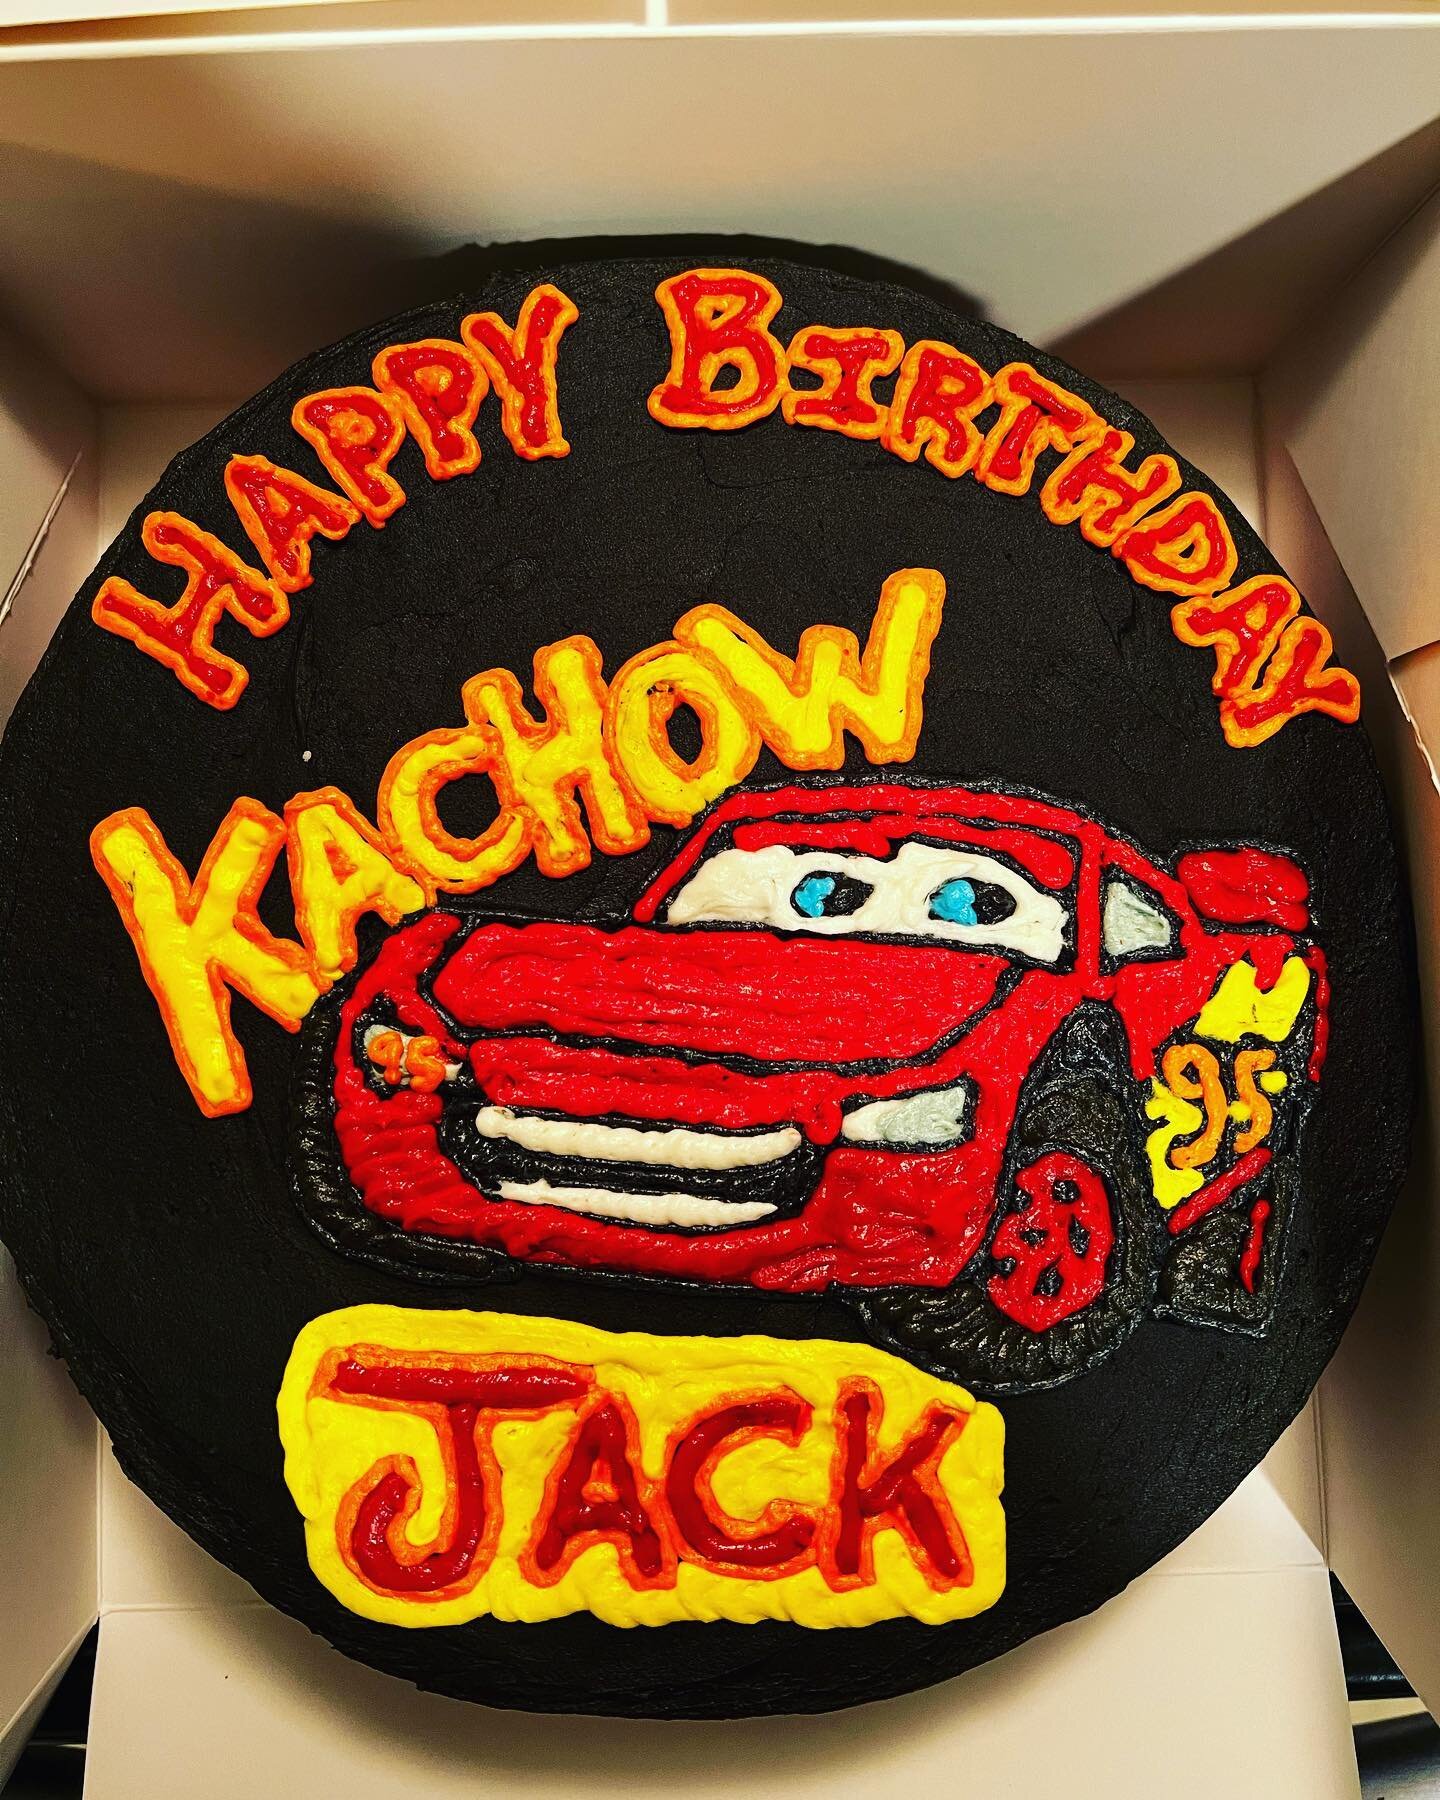 Happy 3rd Birthday Jack!
🚘💛🚘💛🚘
-
-
-
-
-
#rhbakes #cake #cakedecorating #cakes #cakestagram #cakesofinstagram #cakesofinsta #cakesofig #birthdaycake #birthday #birthdayboy #cars #cars3 #pixarcars #3rdbirthday #baking #bakingfromscratch #fromscra